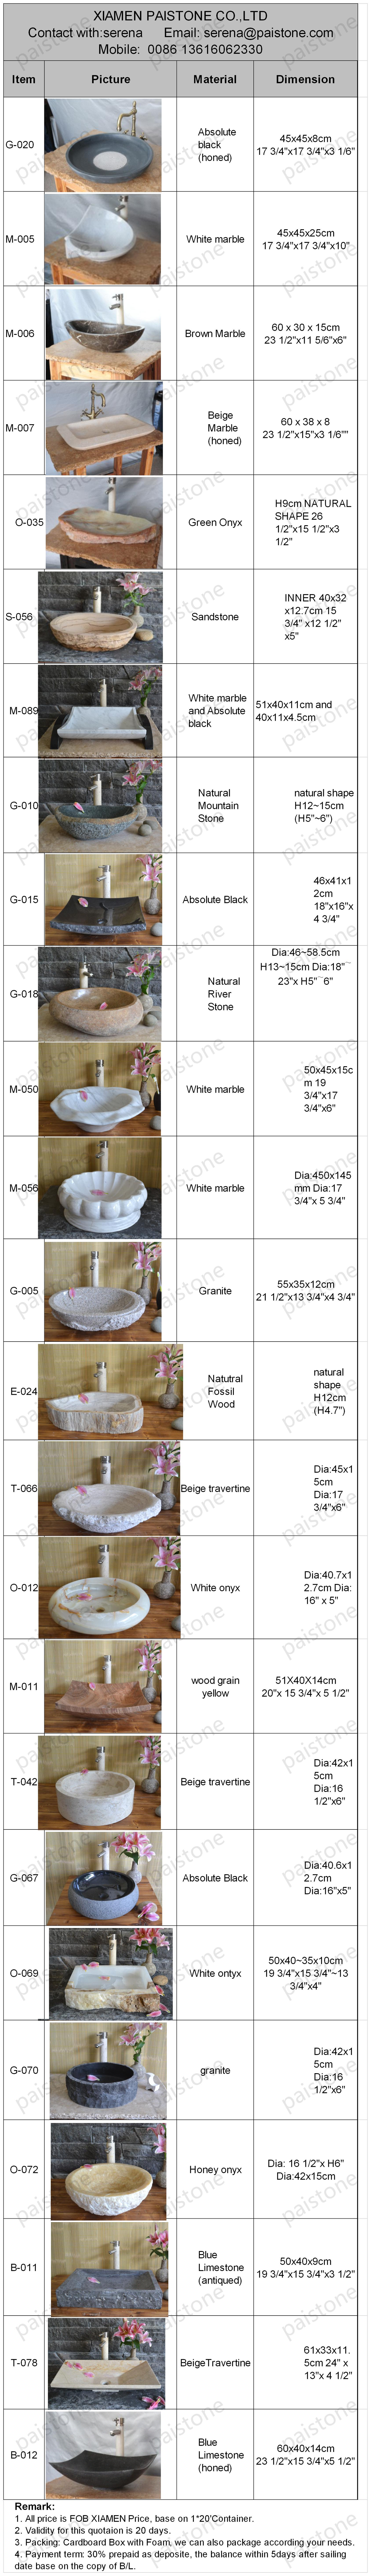 Price List - stone sinks.jpg